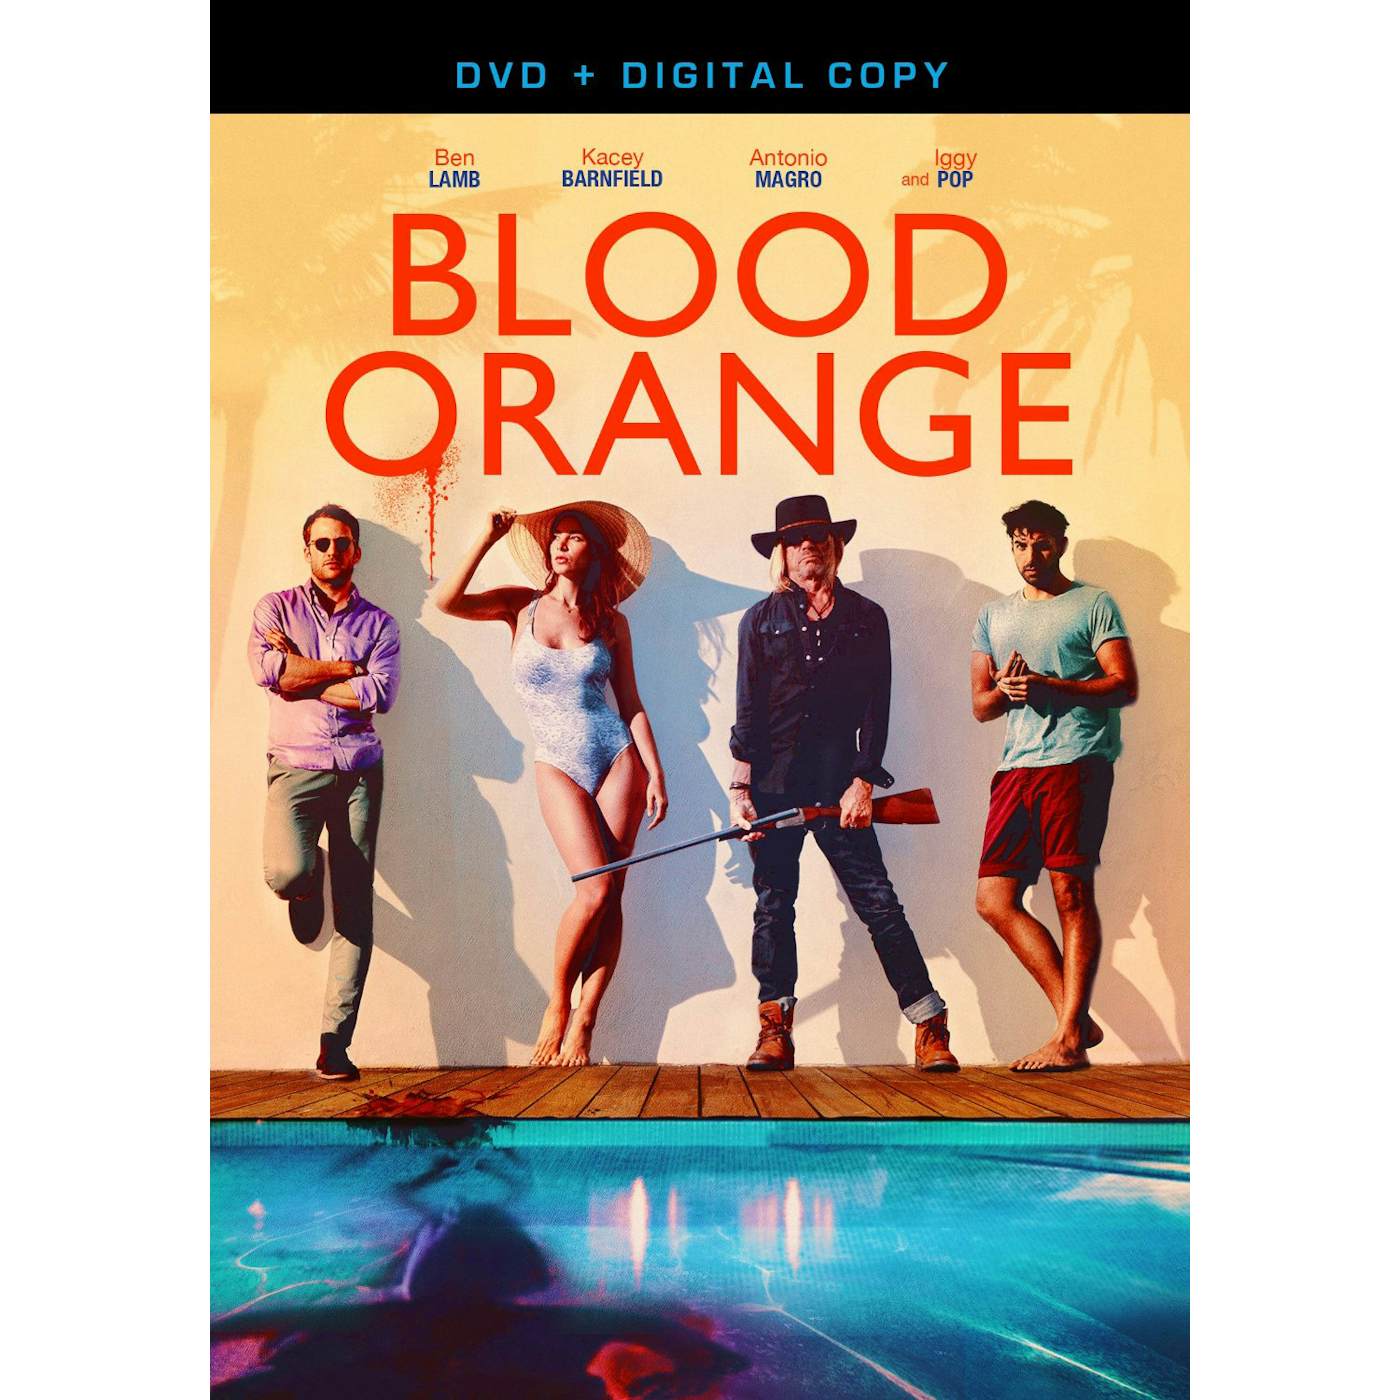 BLOOD ORANGE DVD